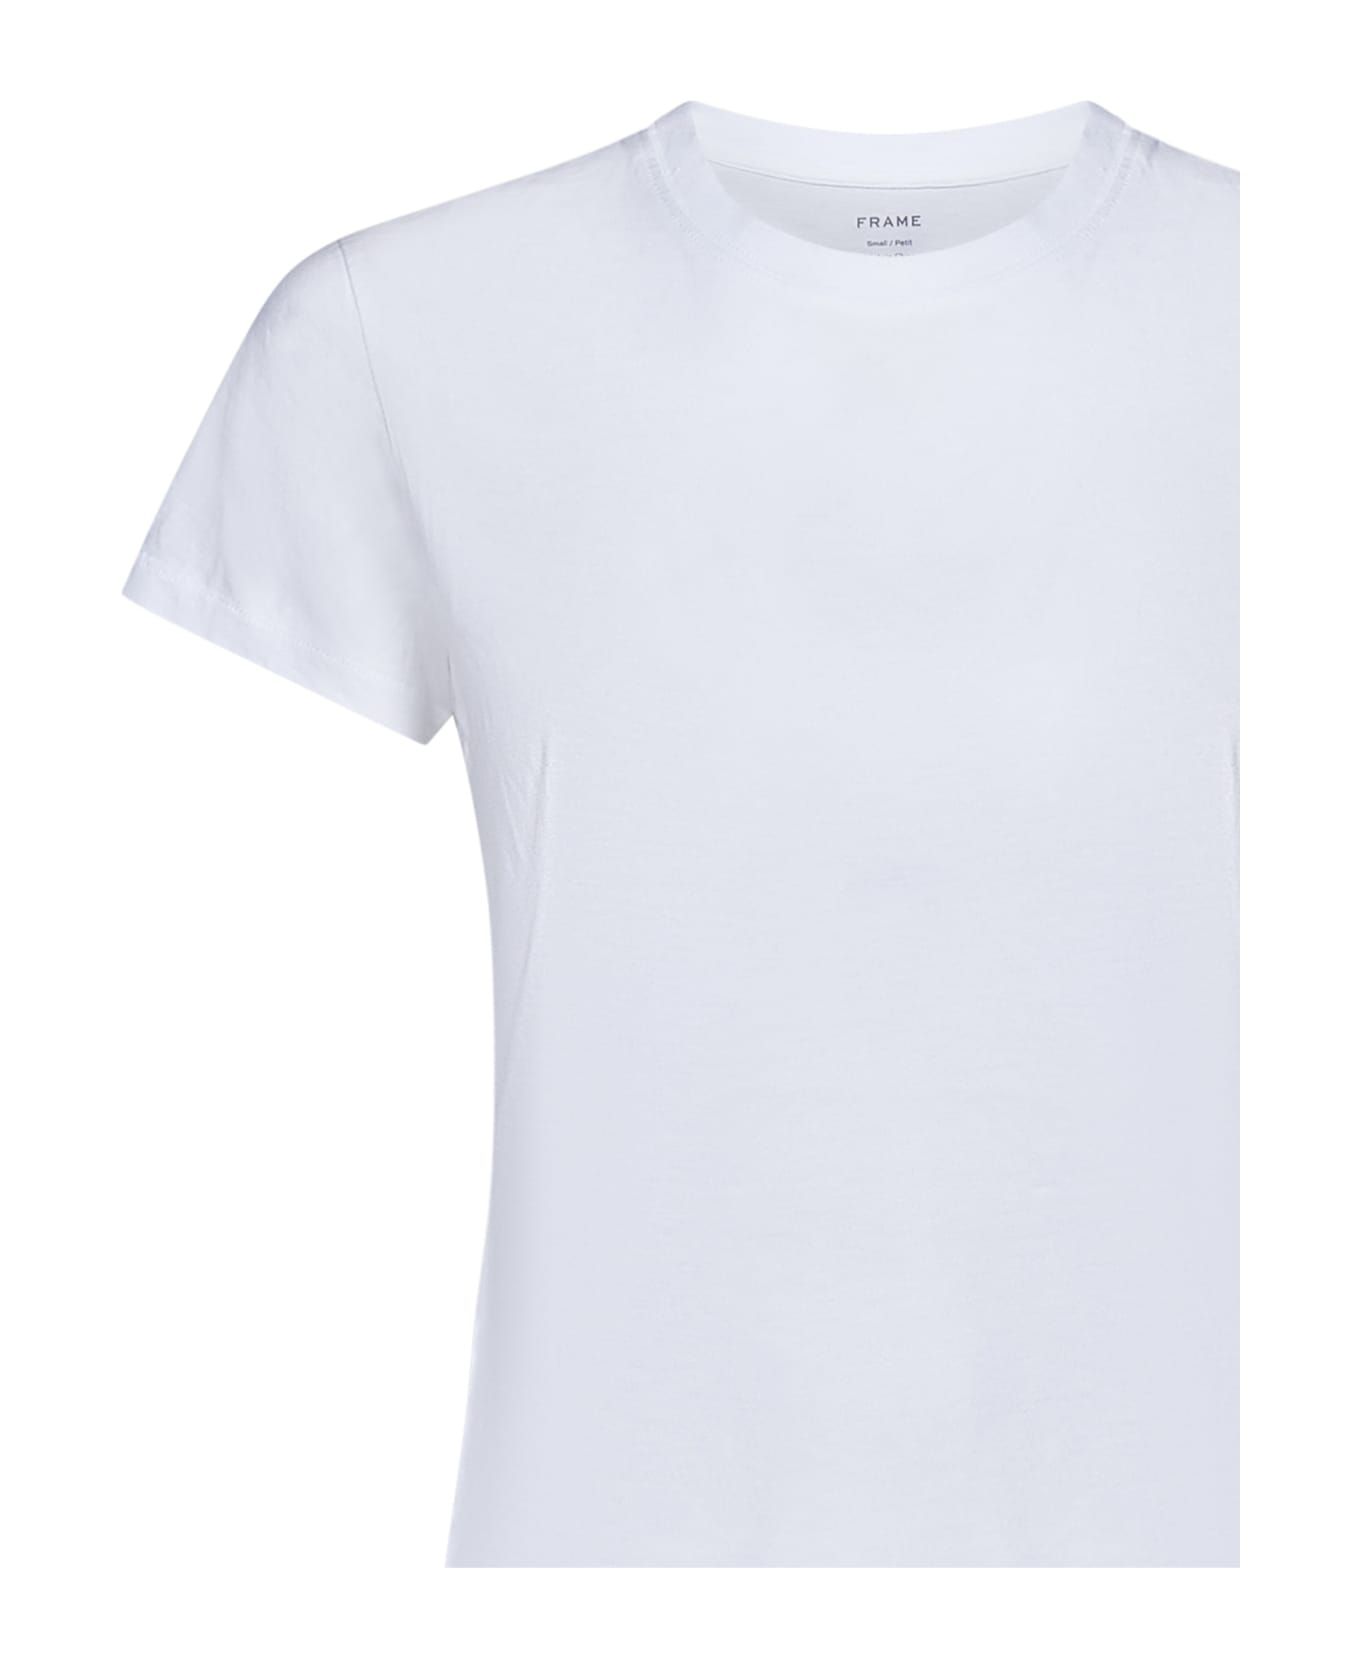 Frame Baby Tee T-shirt - White